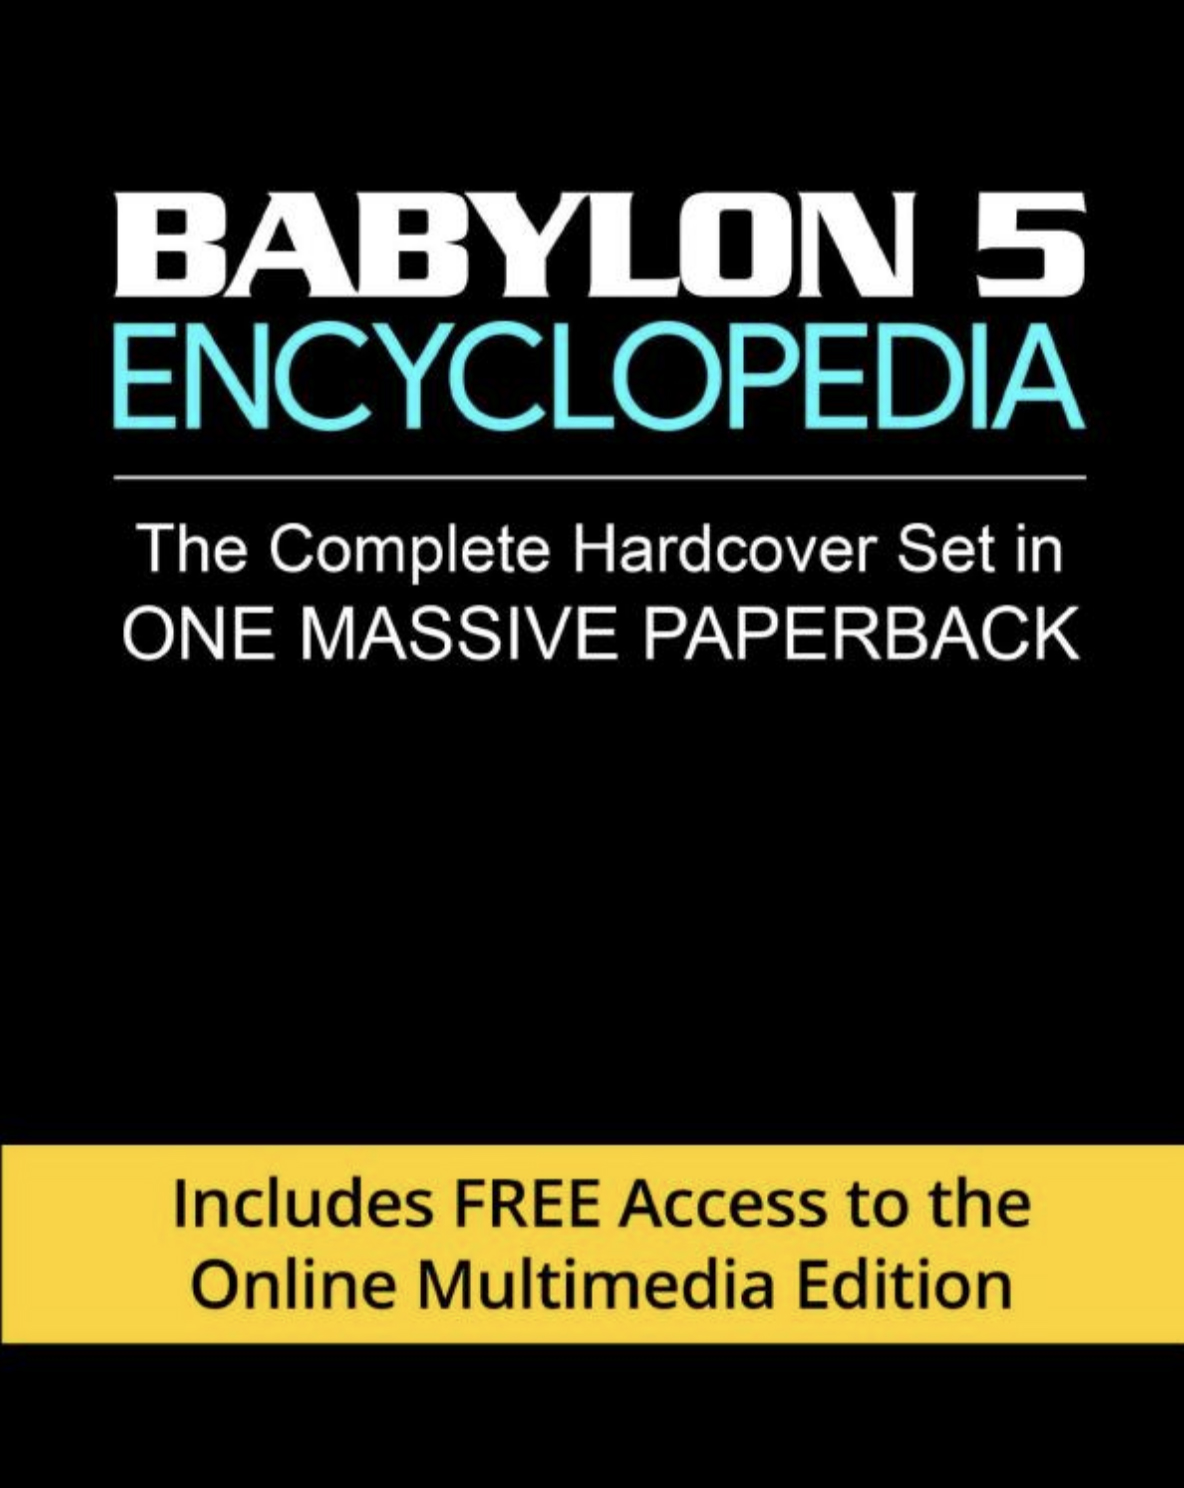 Babylon 5 Encyclopedia